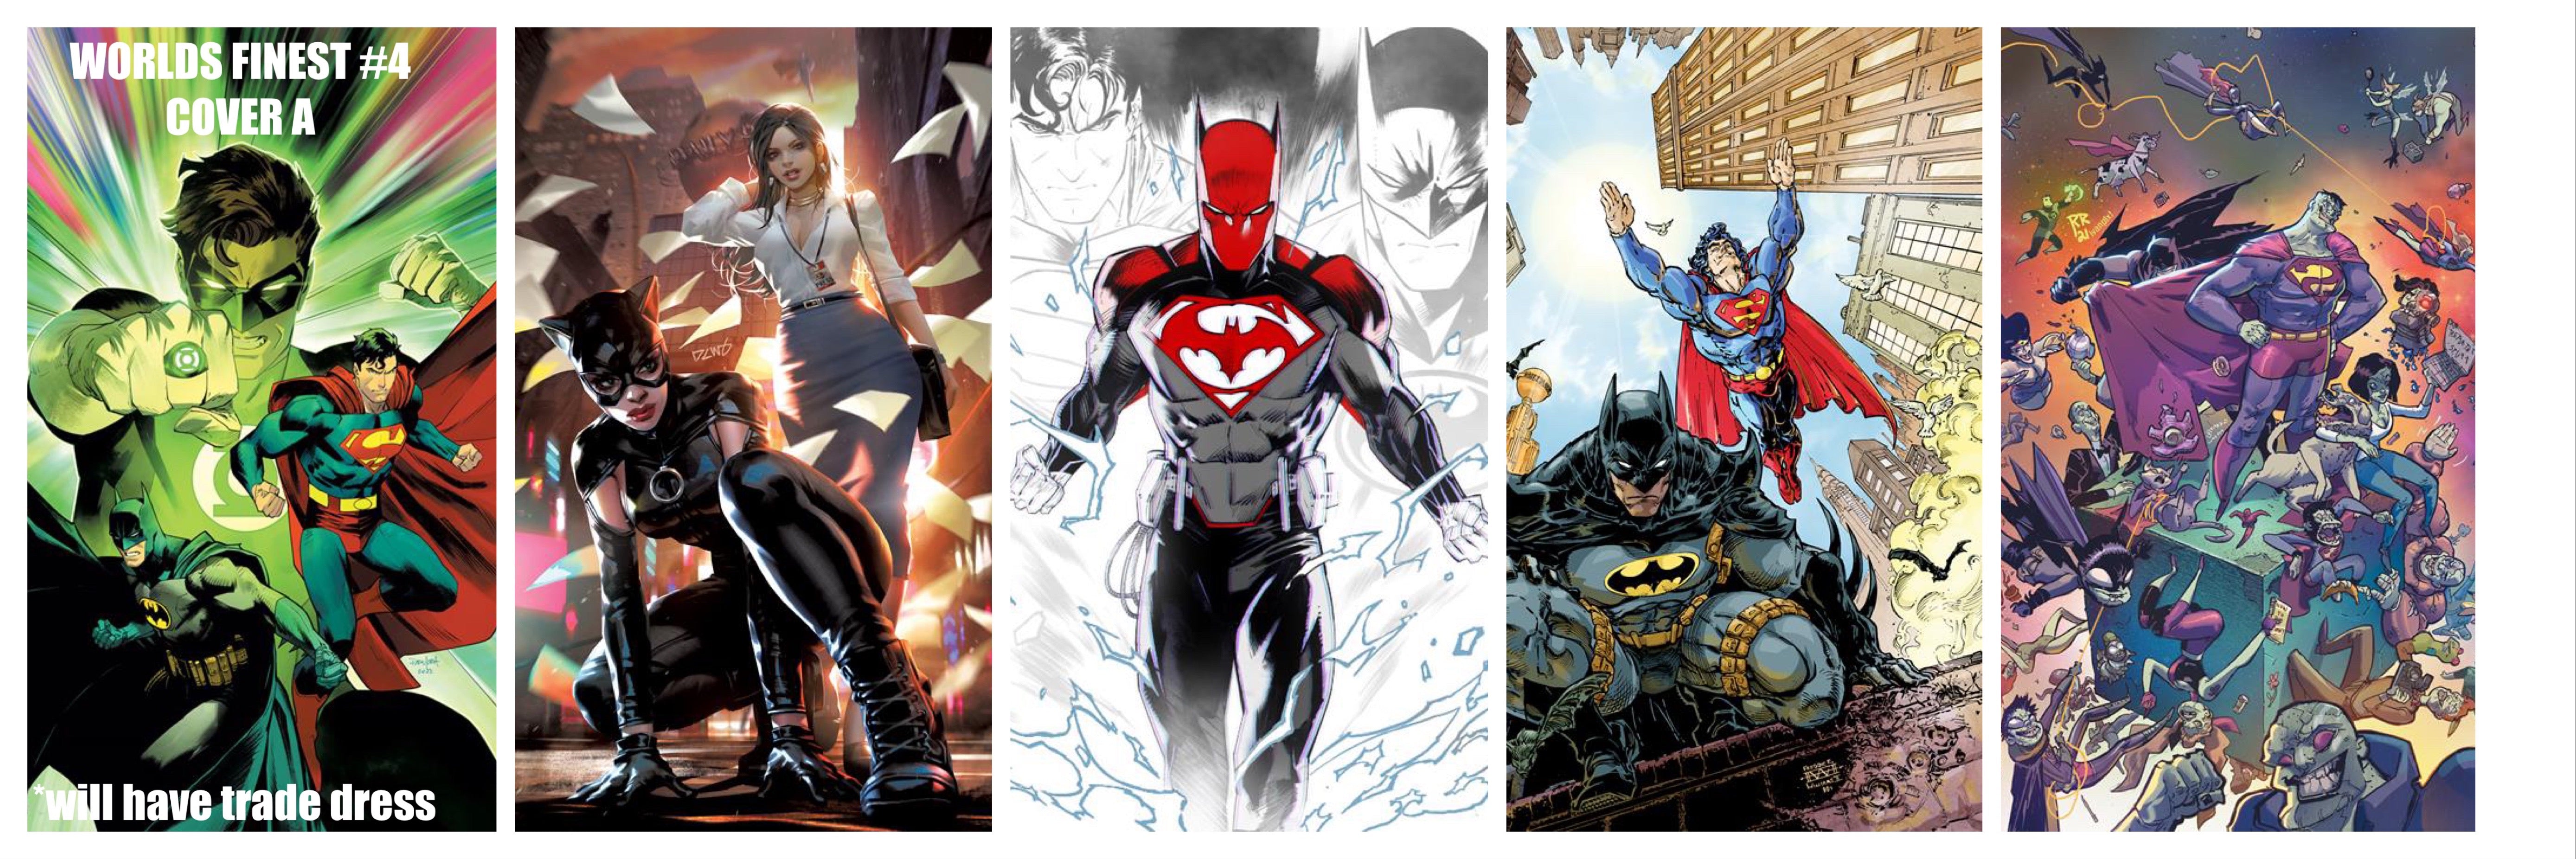 06/21/2022 BATMAN SUPERMAN WORLDS FINEST #4  ULTIMATE 5-PACK (CVR A, B, 1:25, 1:50 & FUSION COVER)